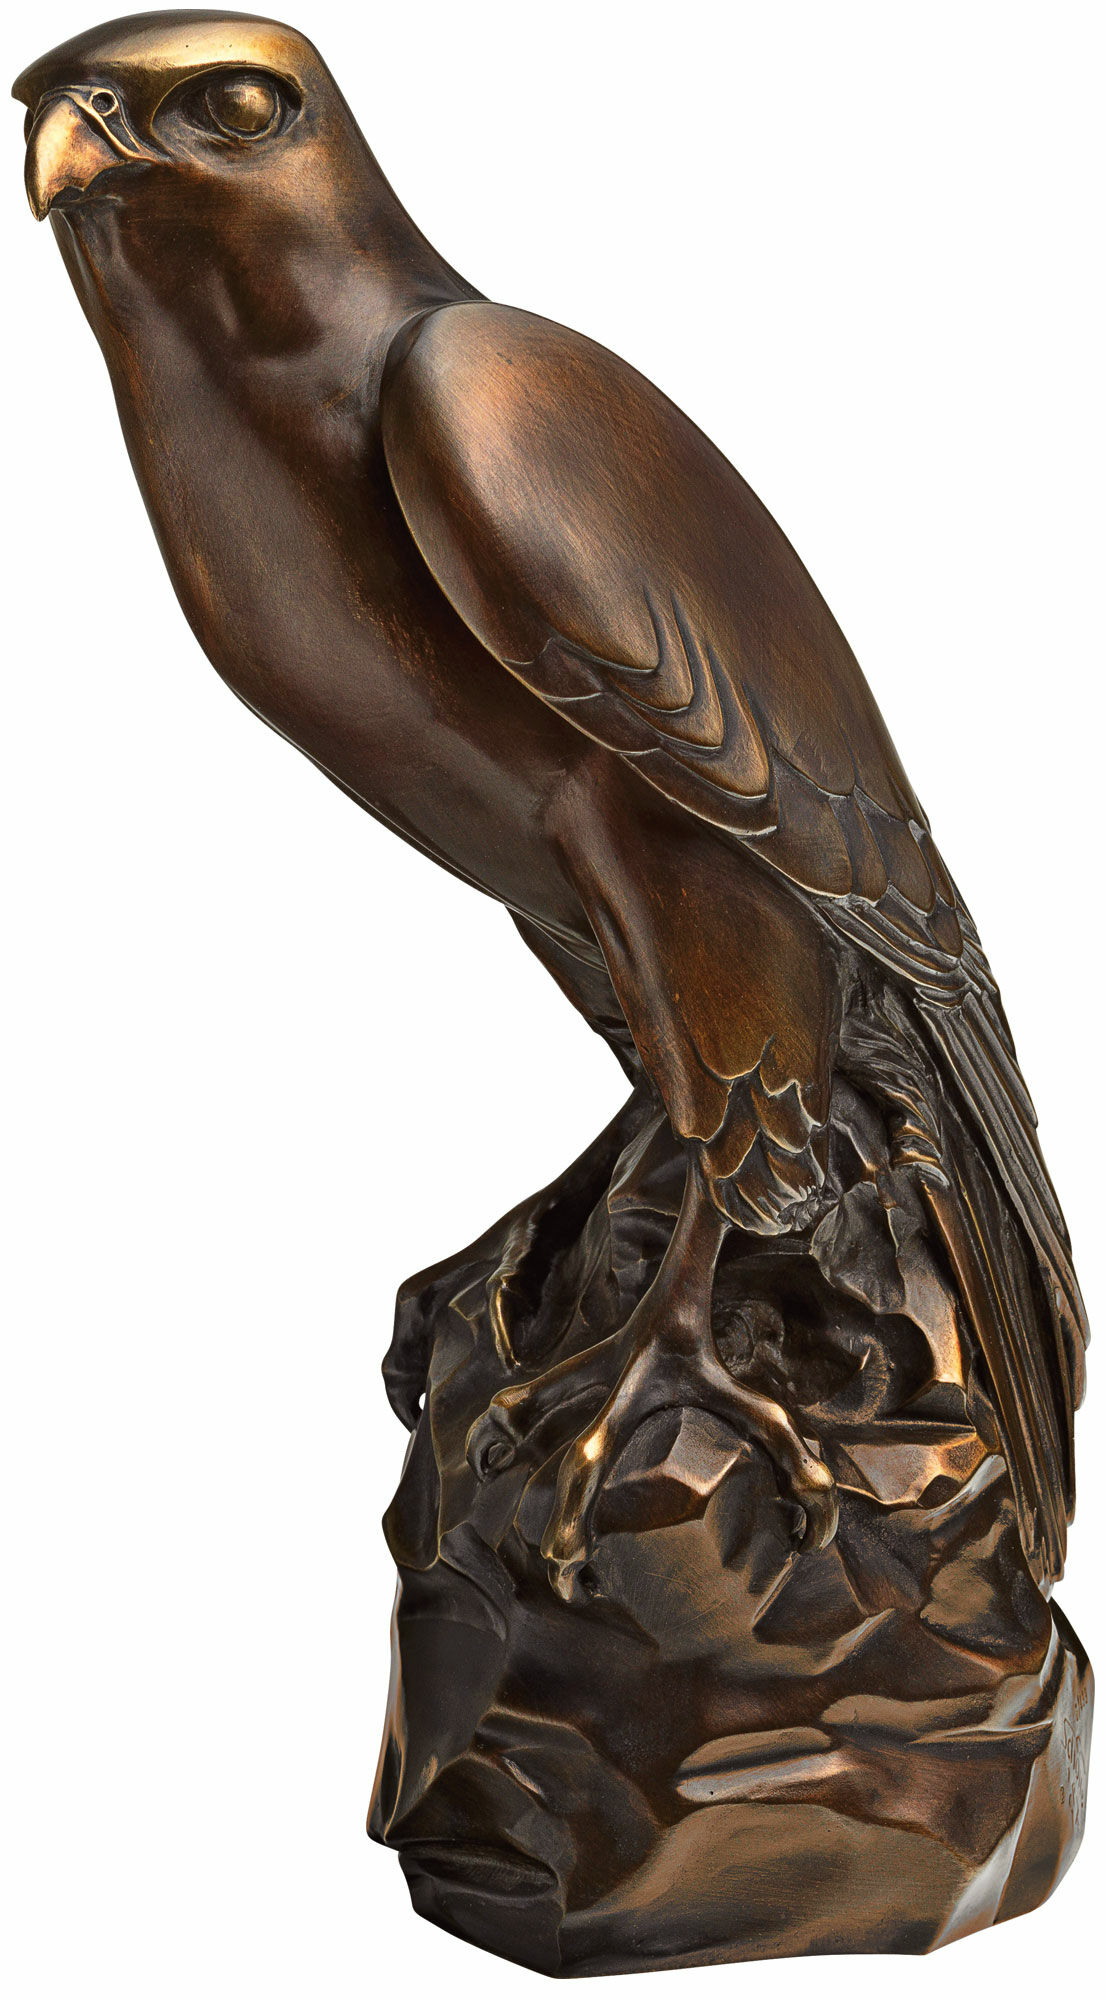 Sculpture "Falcon", bronze version by Thomas Schöne